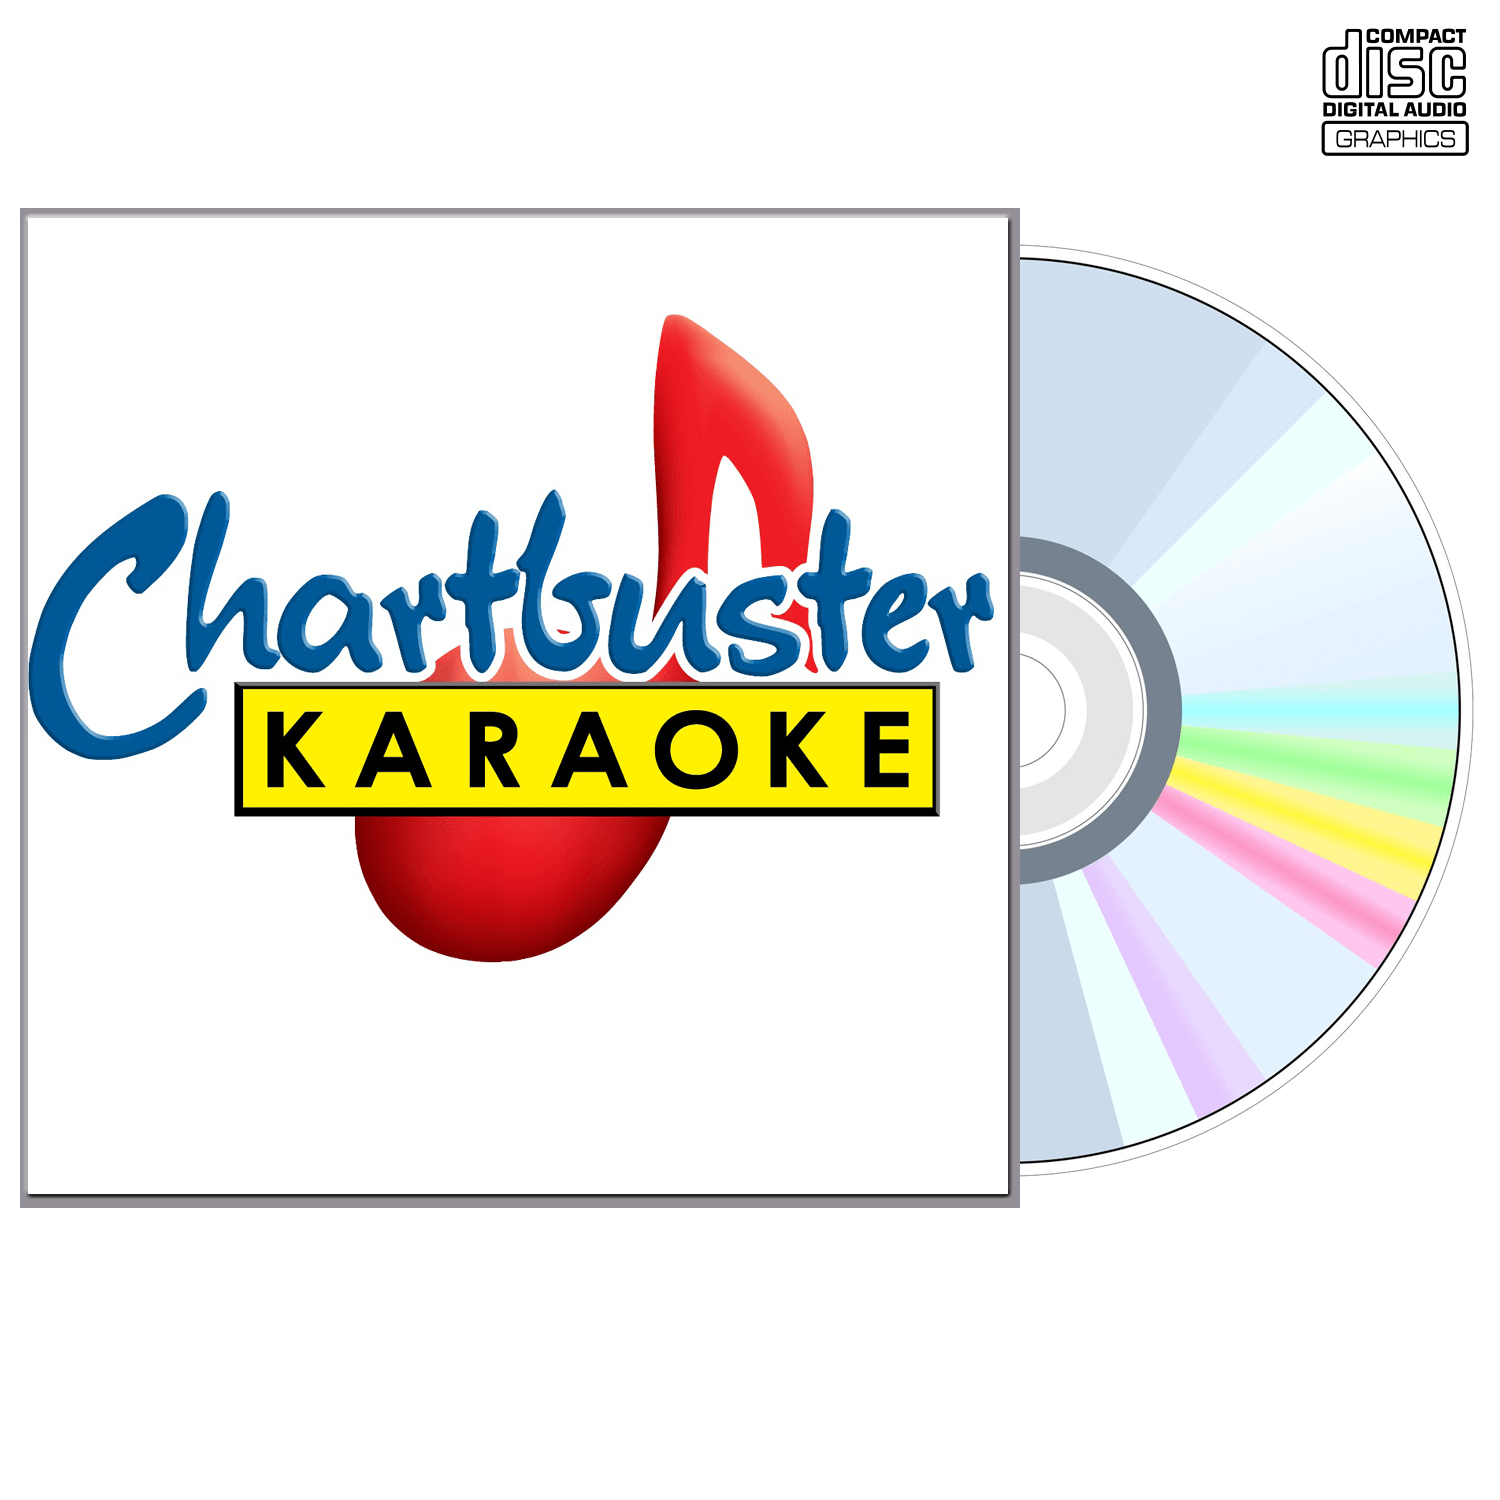 Best Of Conway Twitty - CD+G - Chartbuster Karaoke - Karaoke Home Entertainment